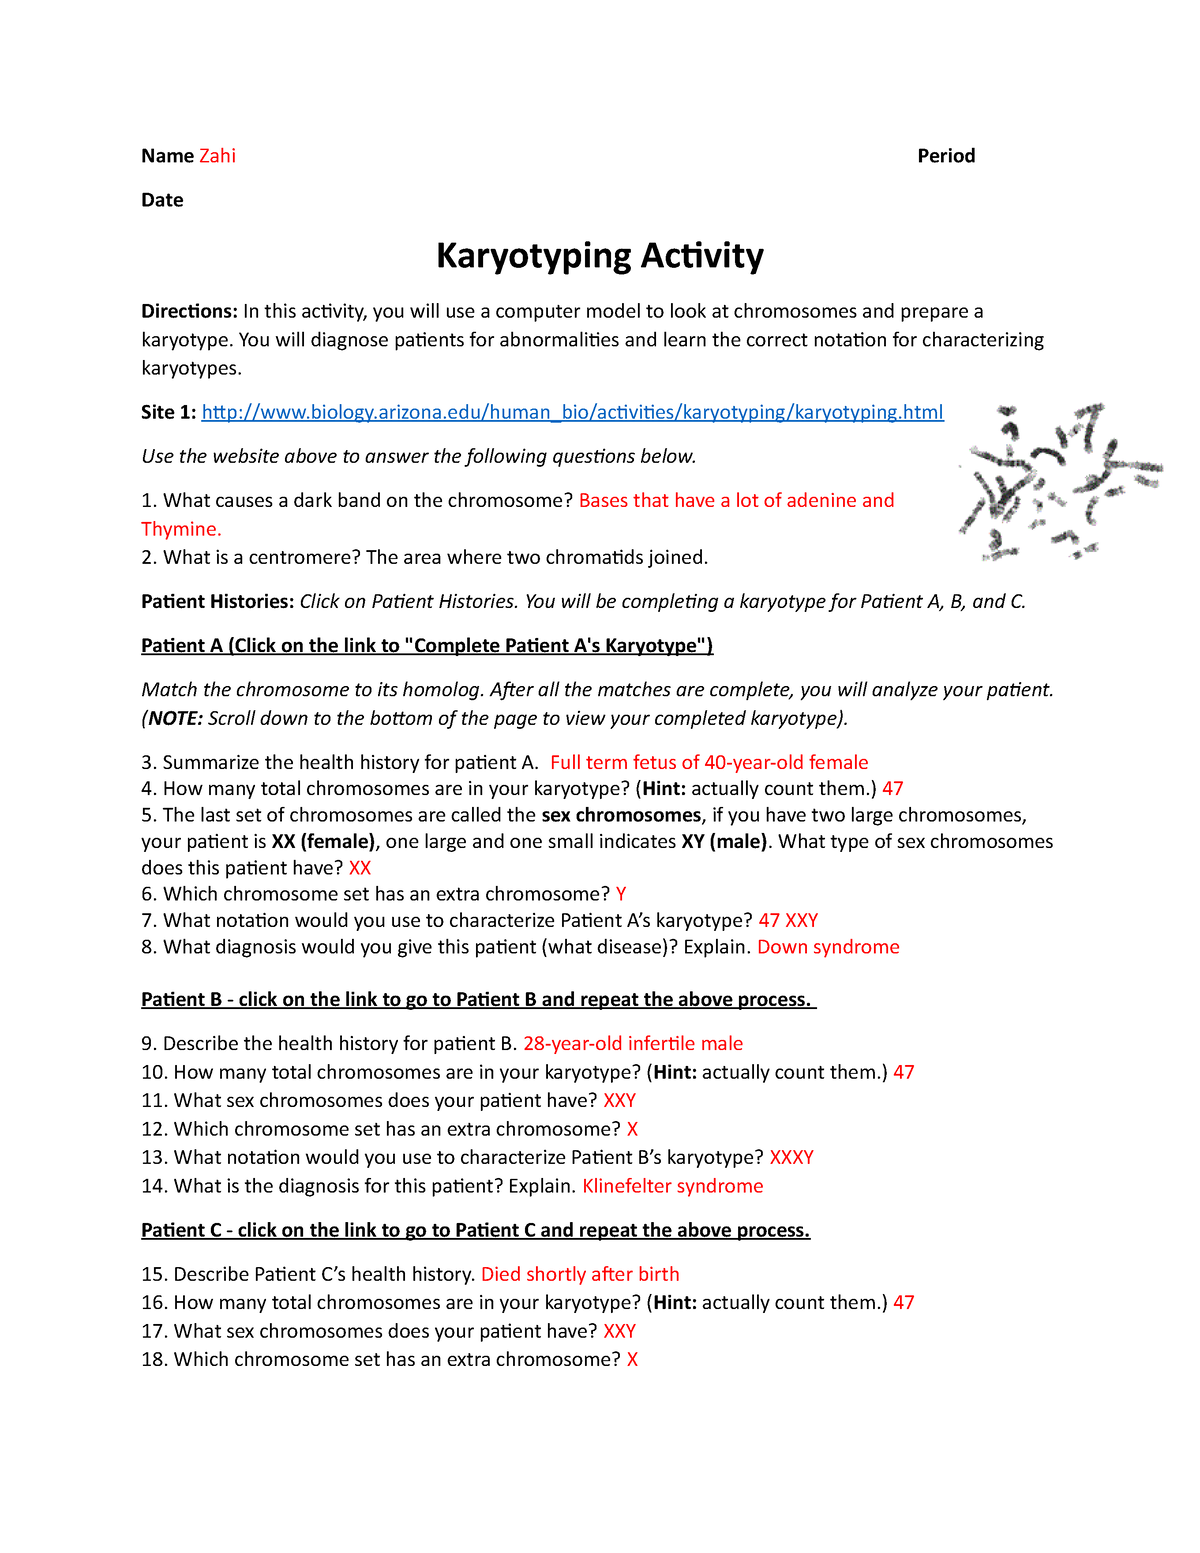 Karyotyping Activity (MB) 1 ANSWER KEY Name Zahi Period Date